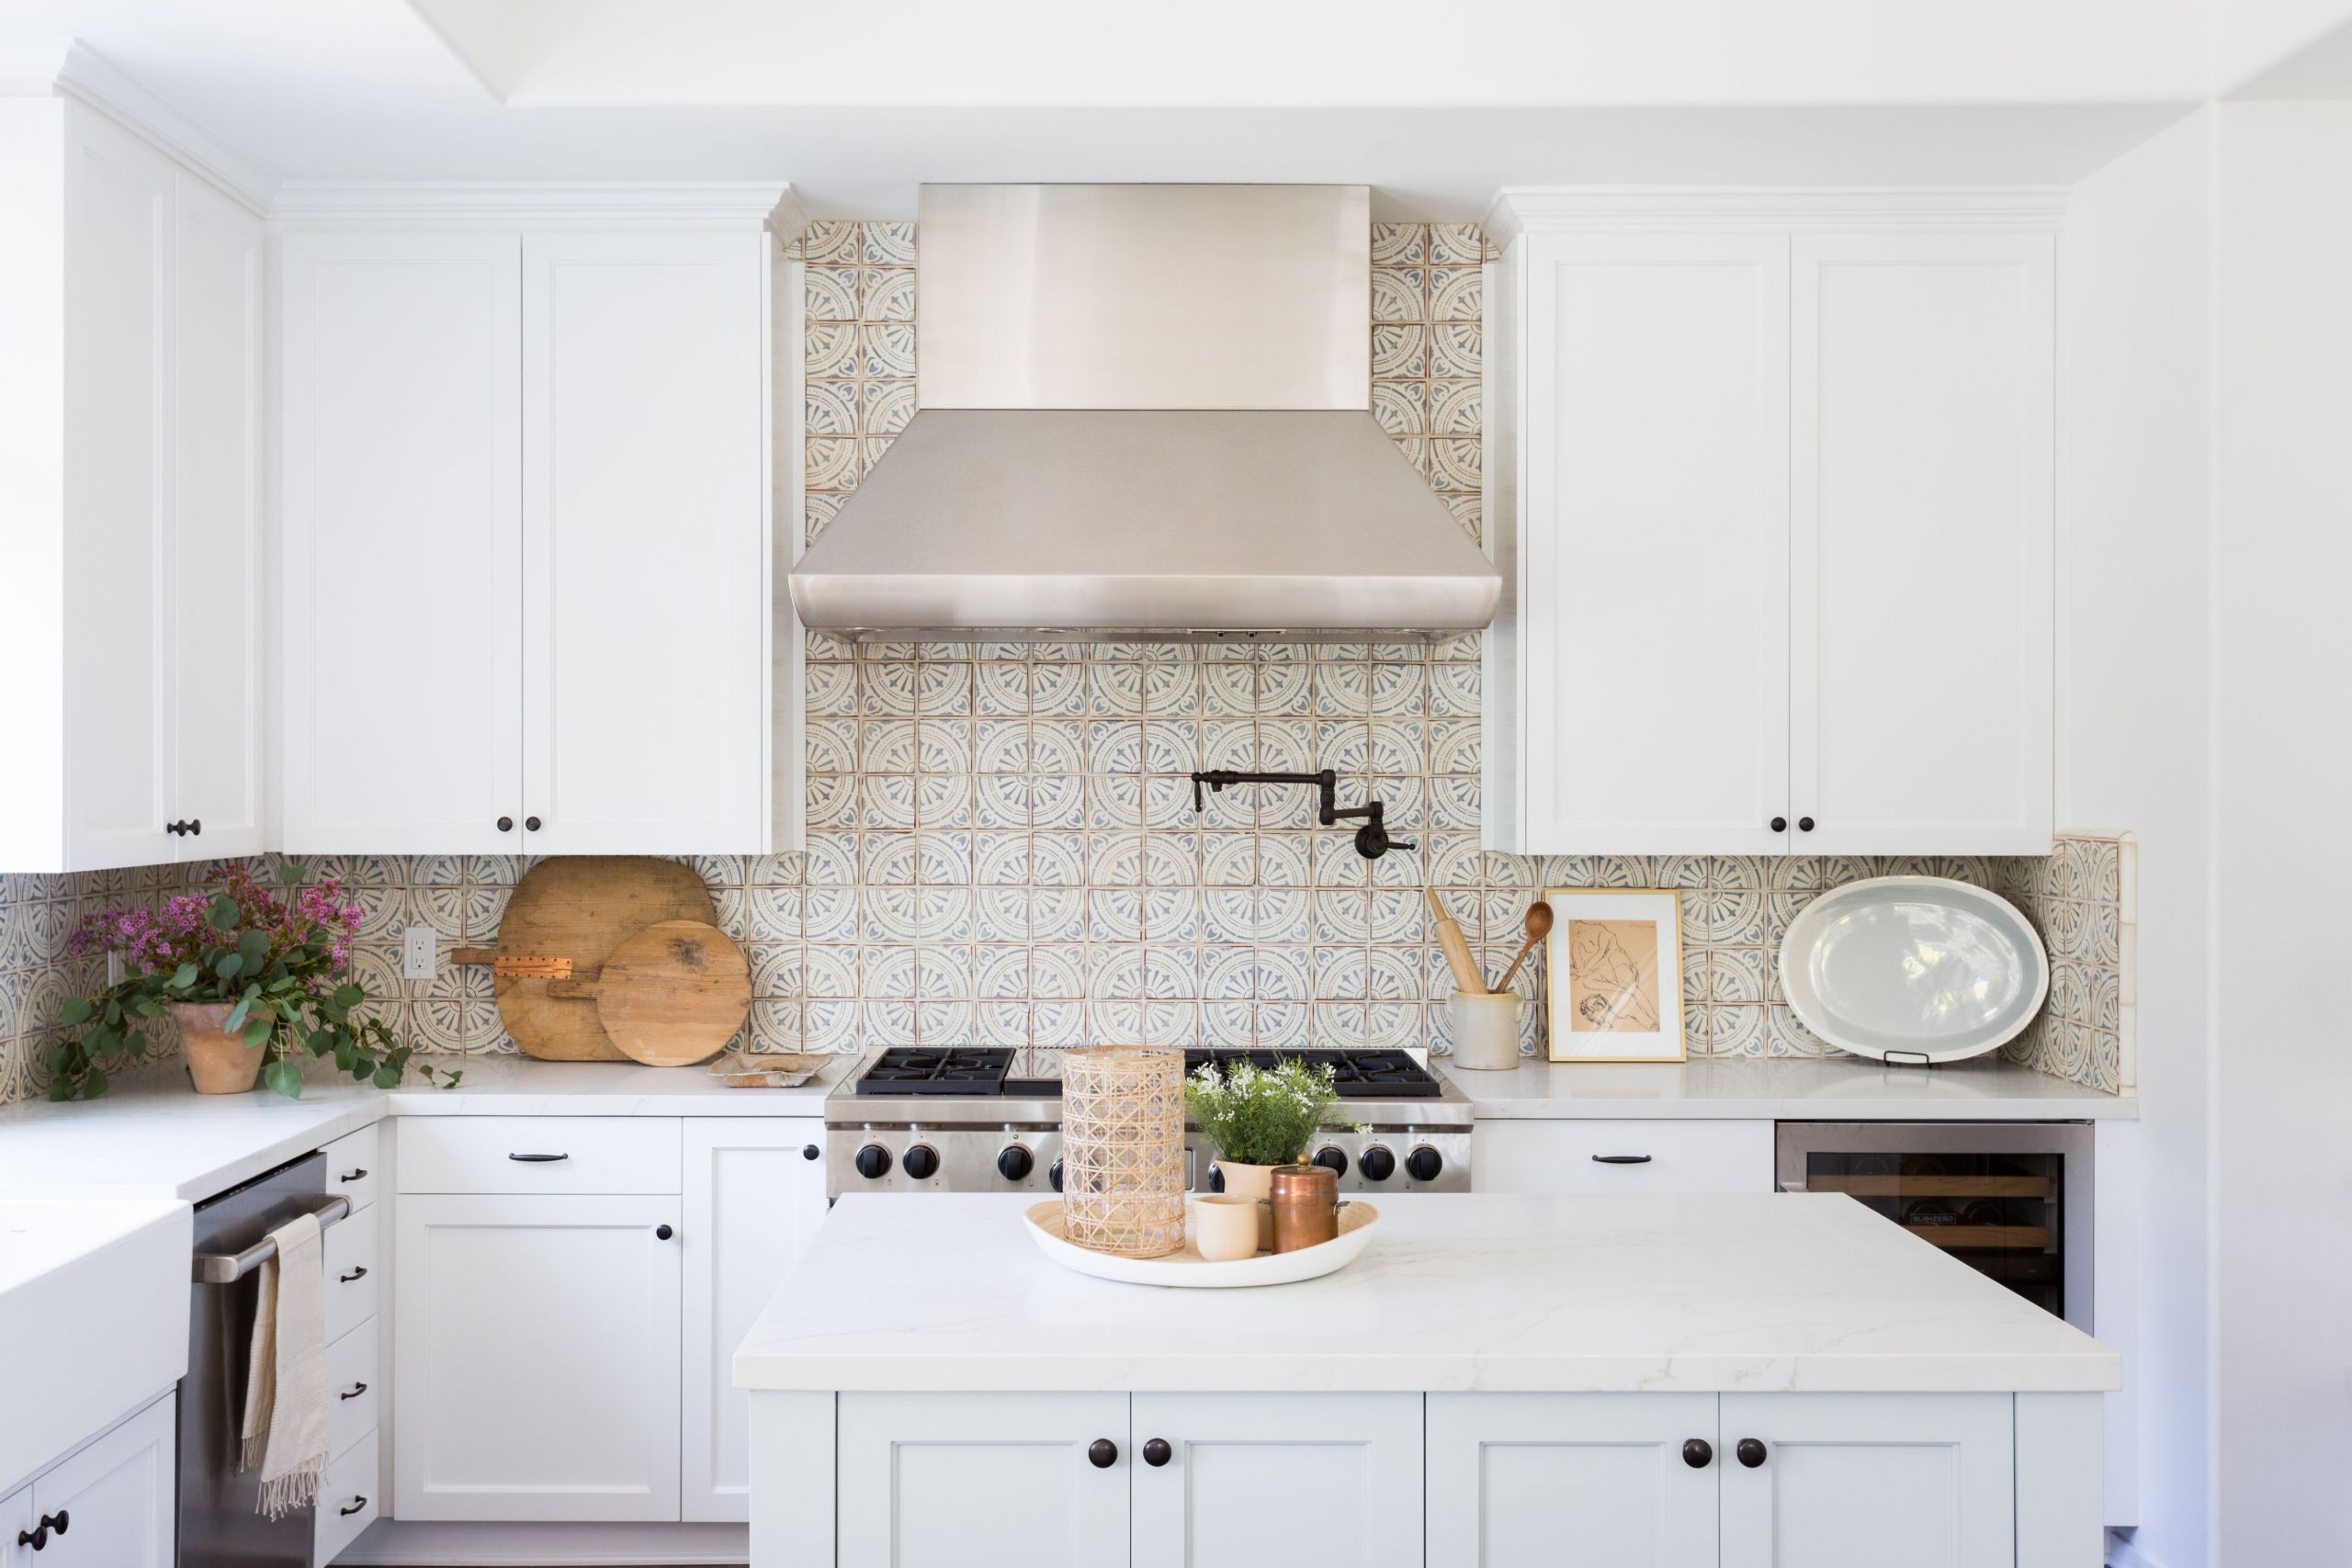 Kitchen Tile Backsplash Pics
 27 Kitchen Tile Backsplash Ideas We Love